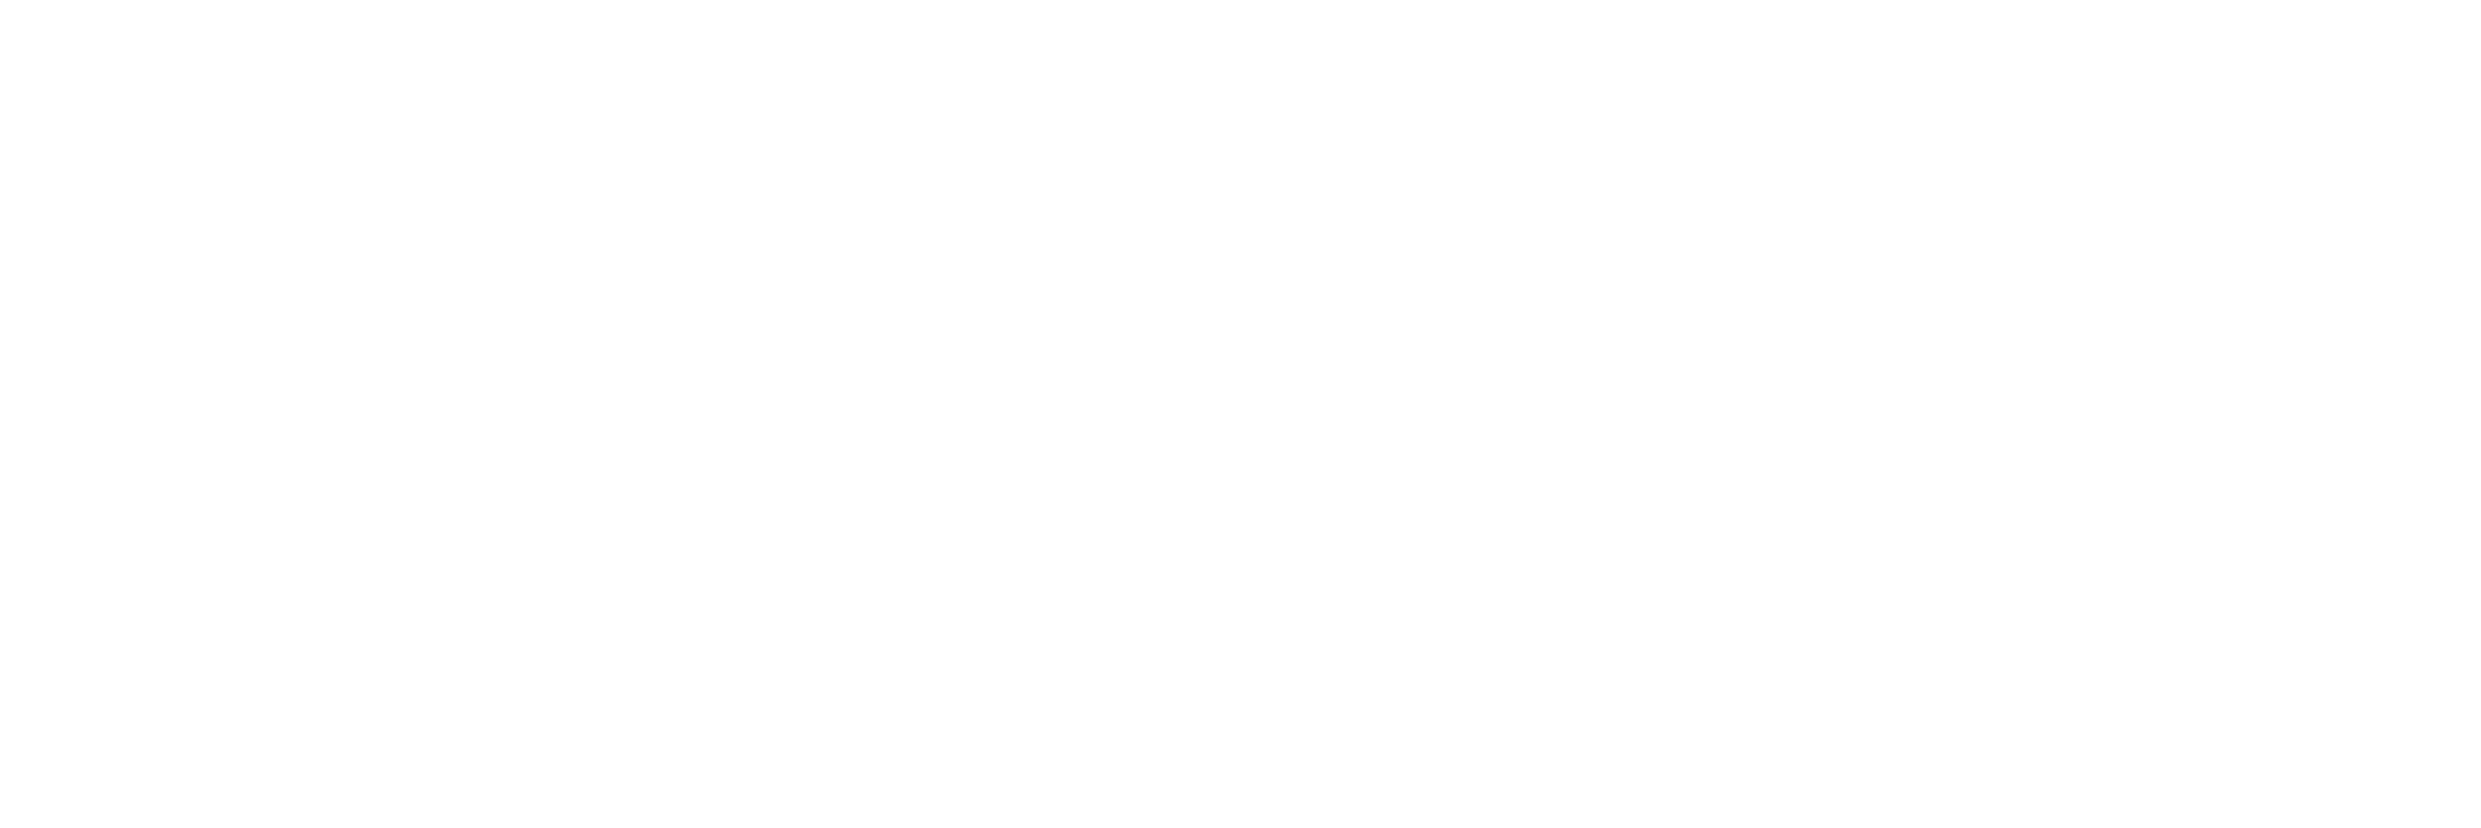 Kevuo╠Ç_logo_vettoriale